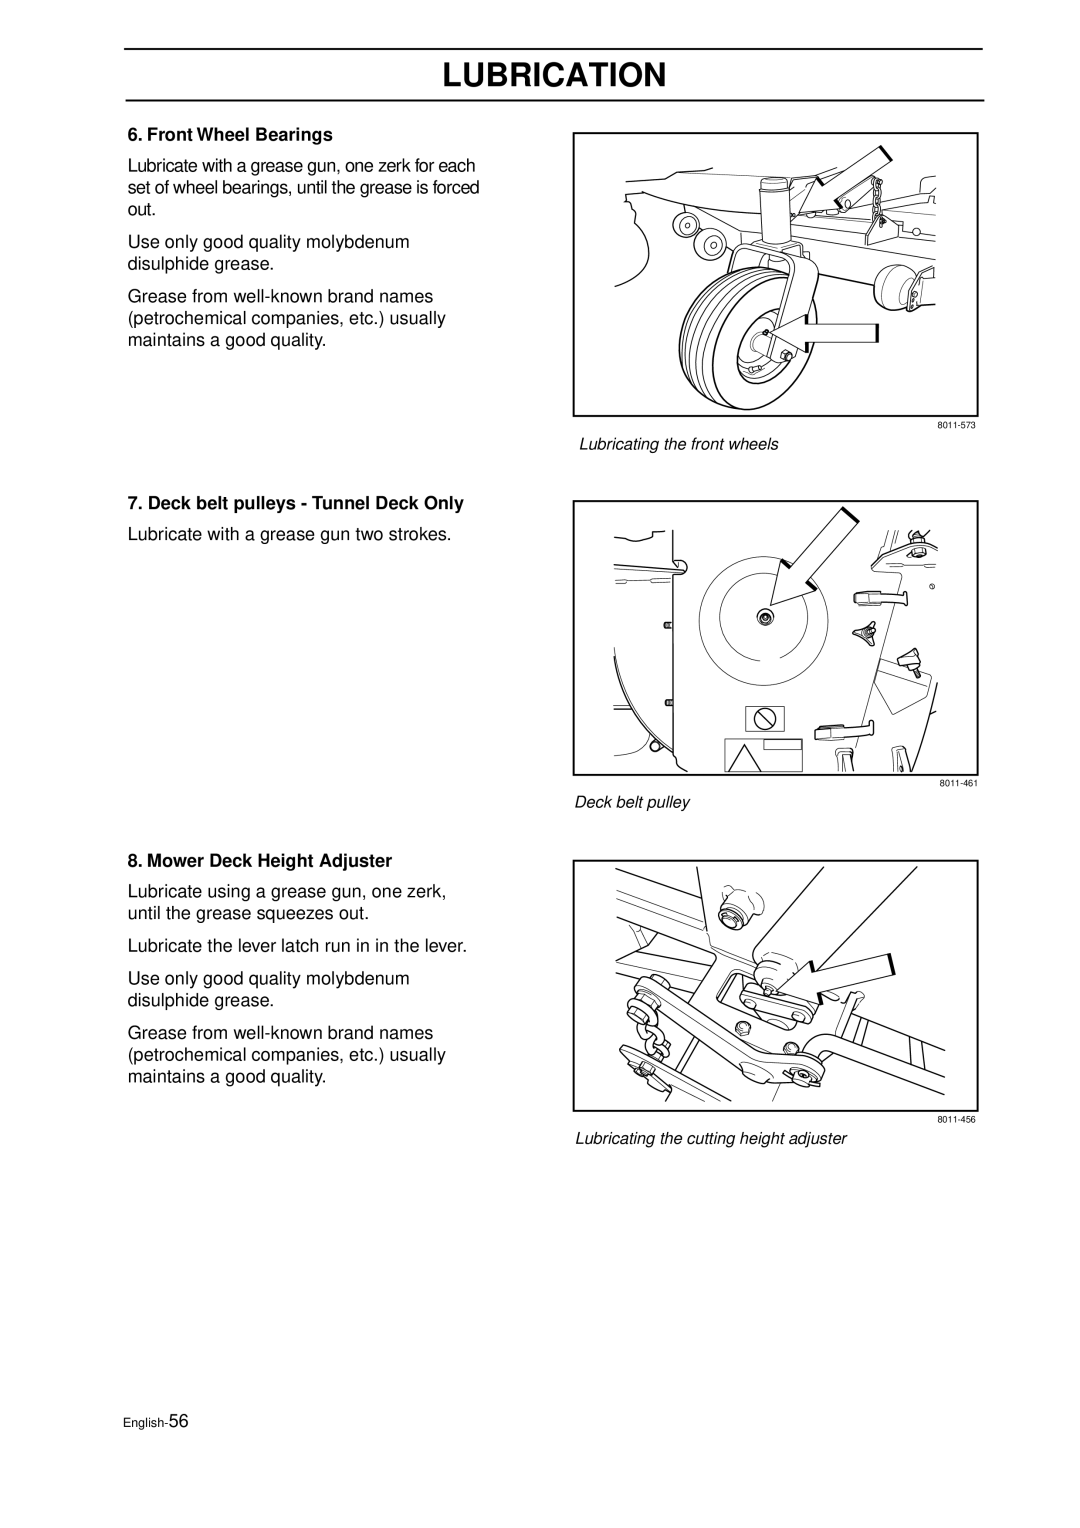 Husqvarna IZ 21 manual Front Wheel Bearings, Deck belt pulleys - Tunnel Deck Only, Mower Deck Height Adjuster, Lubrication 